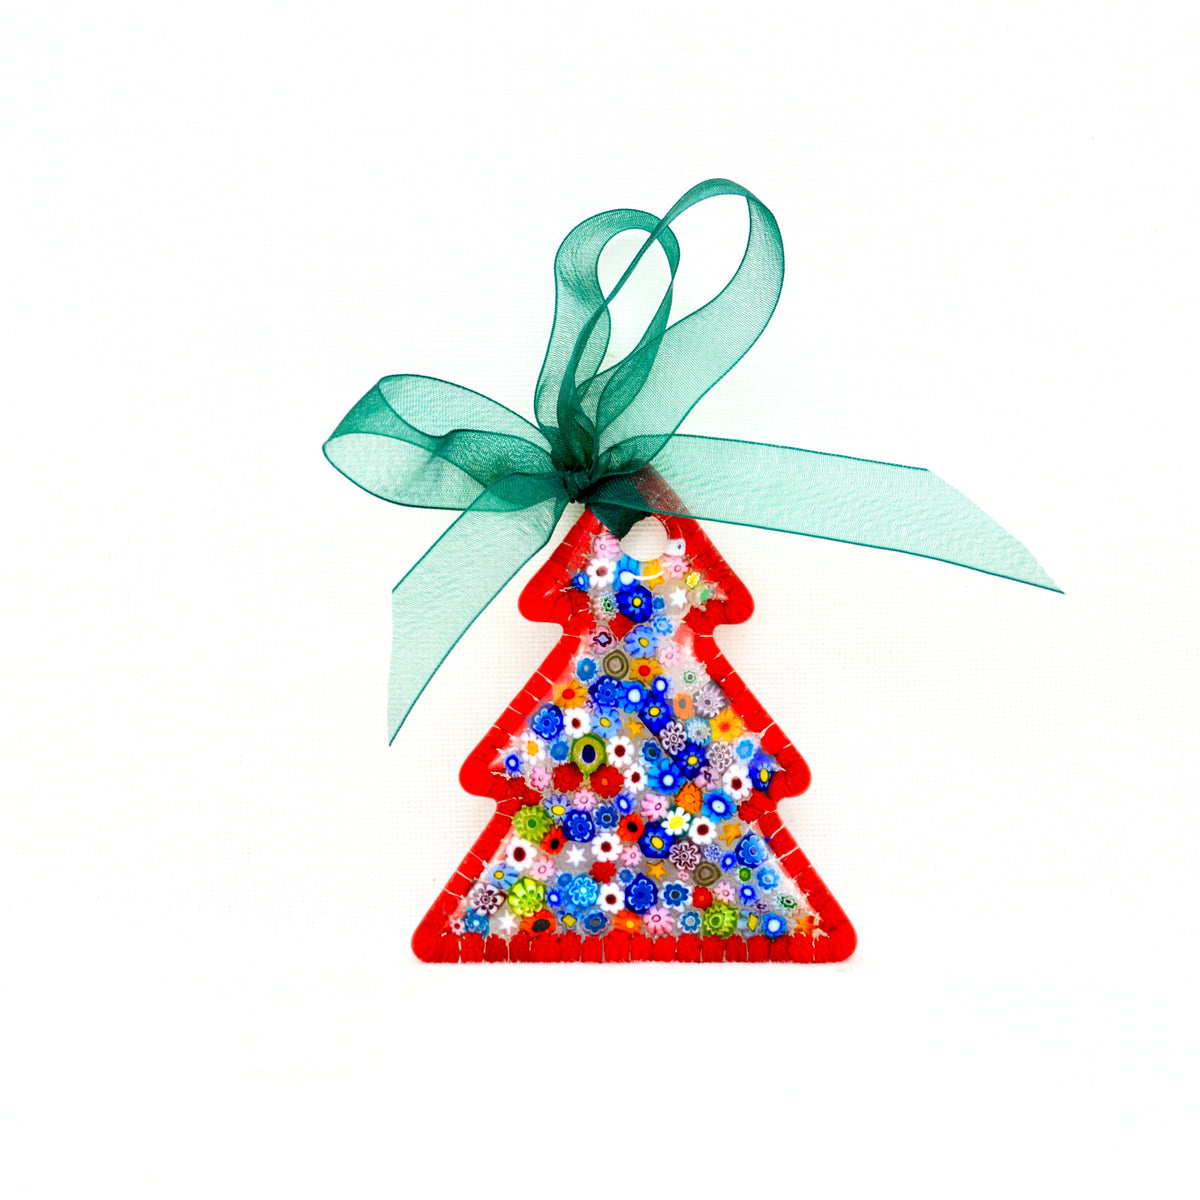 Millefiori Glass Christmas Tree Ornament, Made in Italy - My Italian Decor